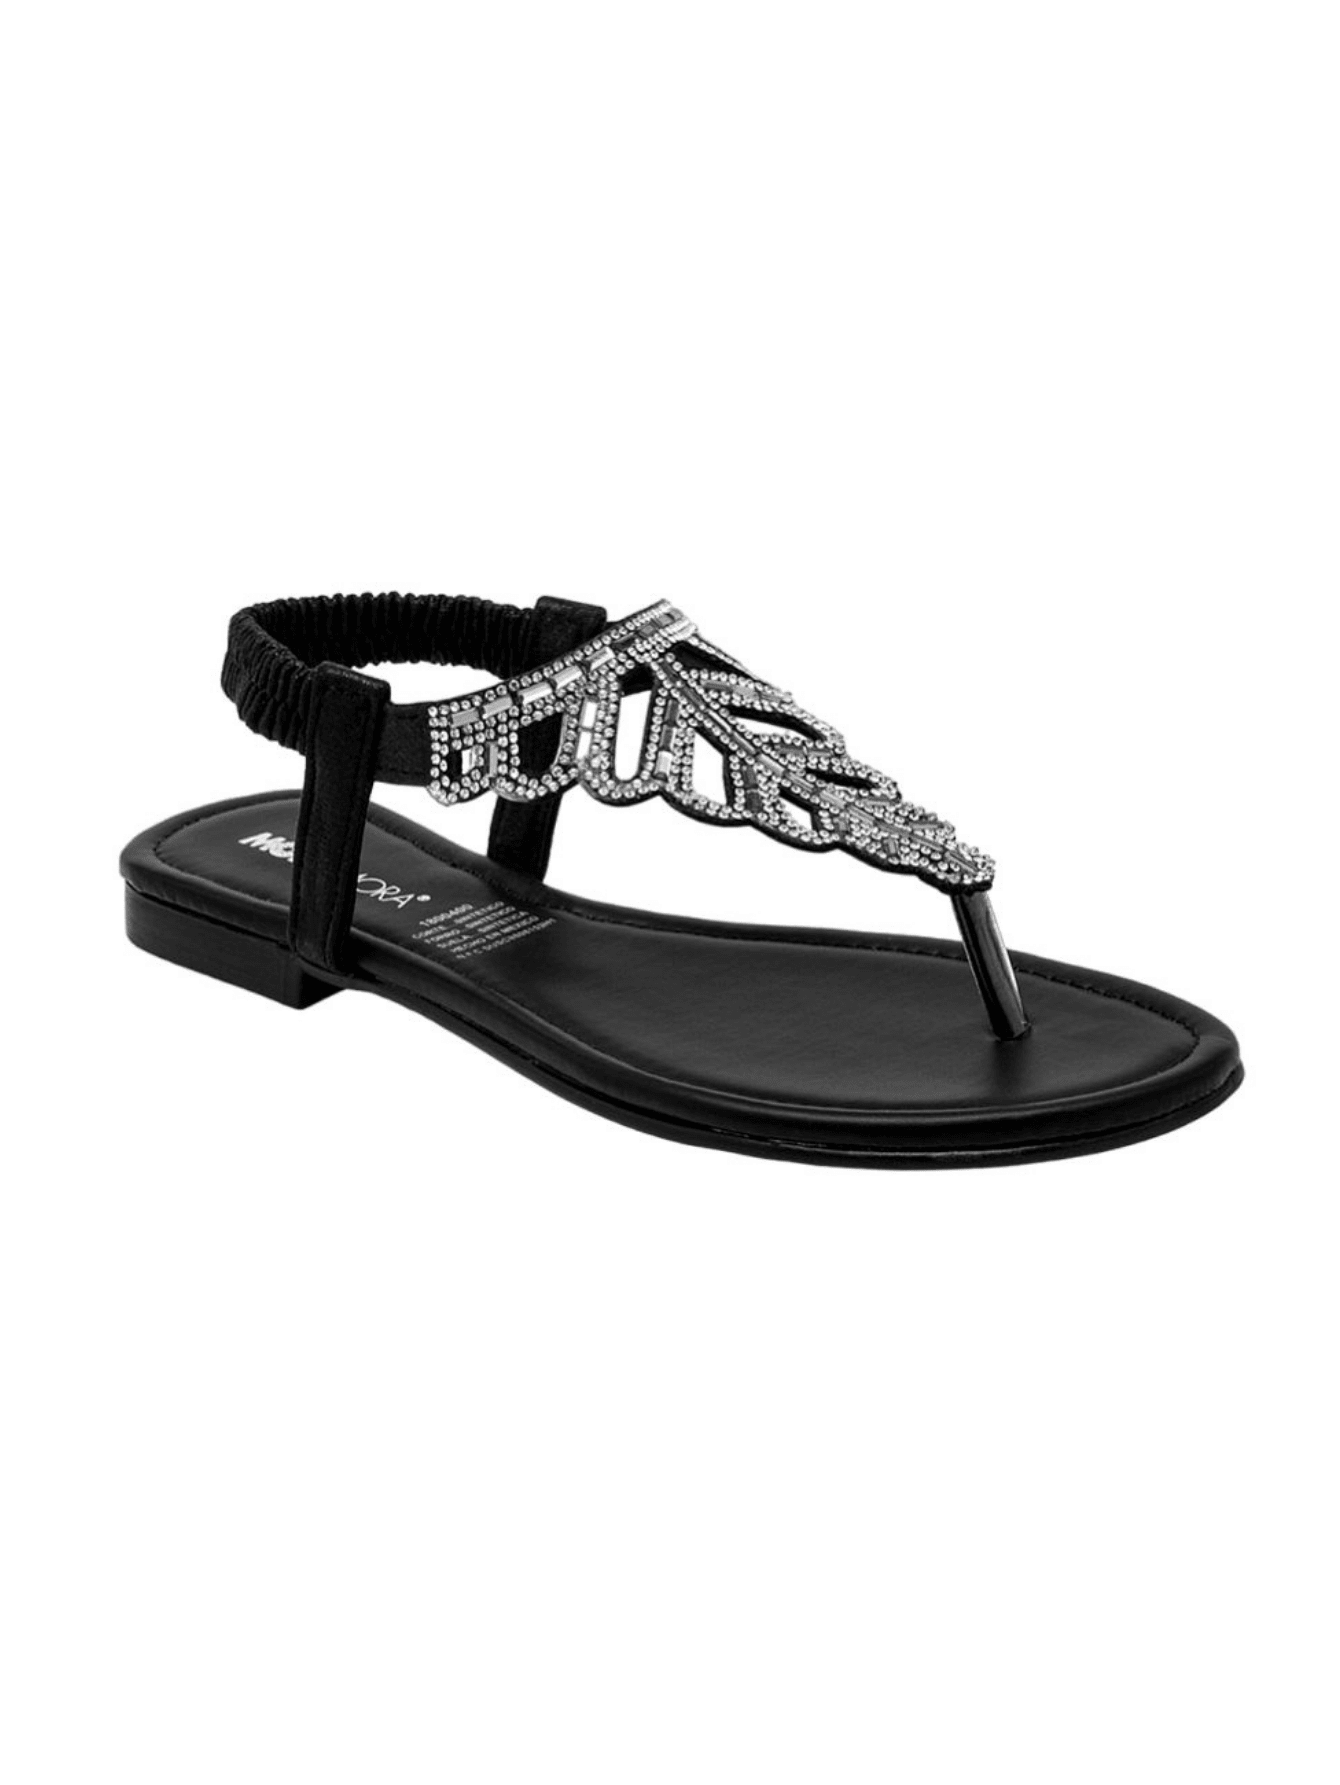 "Moramora Sandals Flip Flops For Women In Black"-Black-1